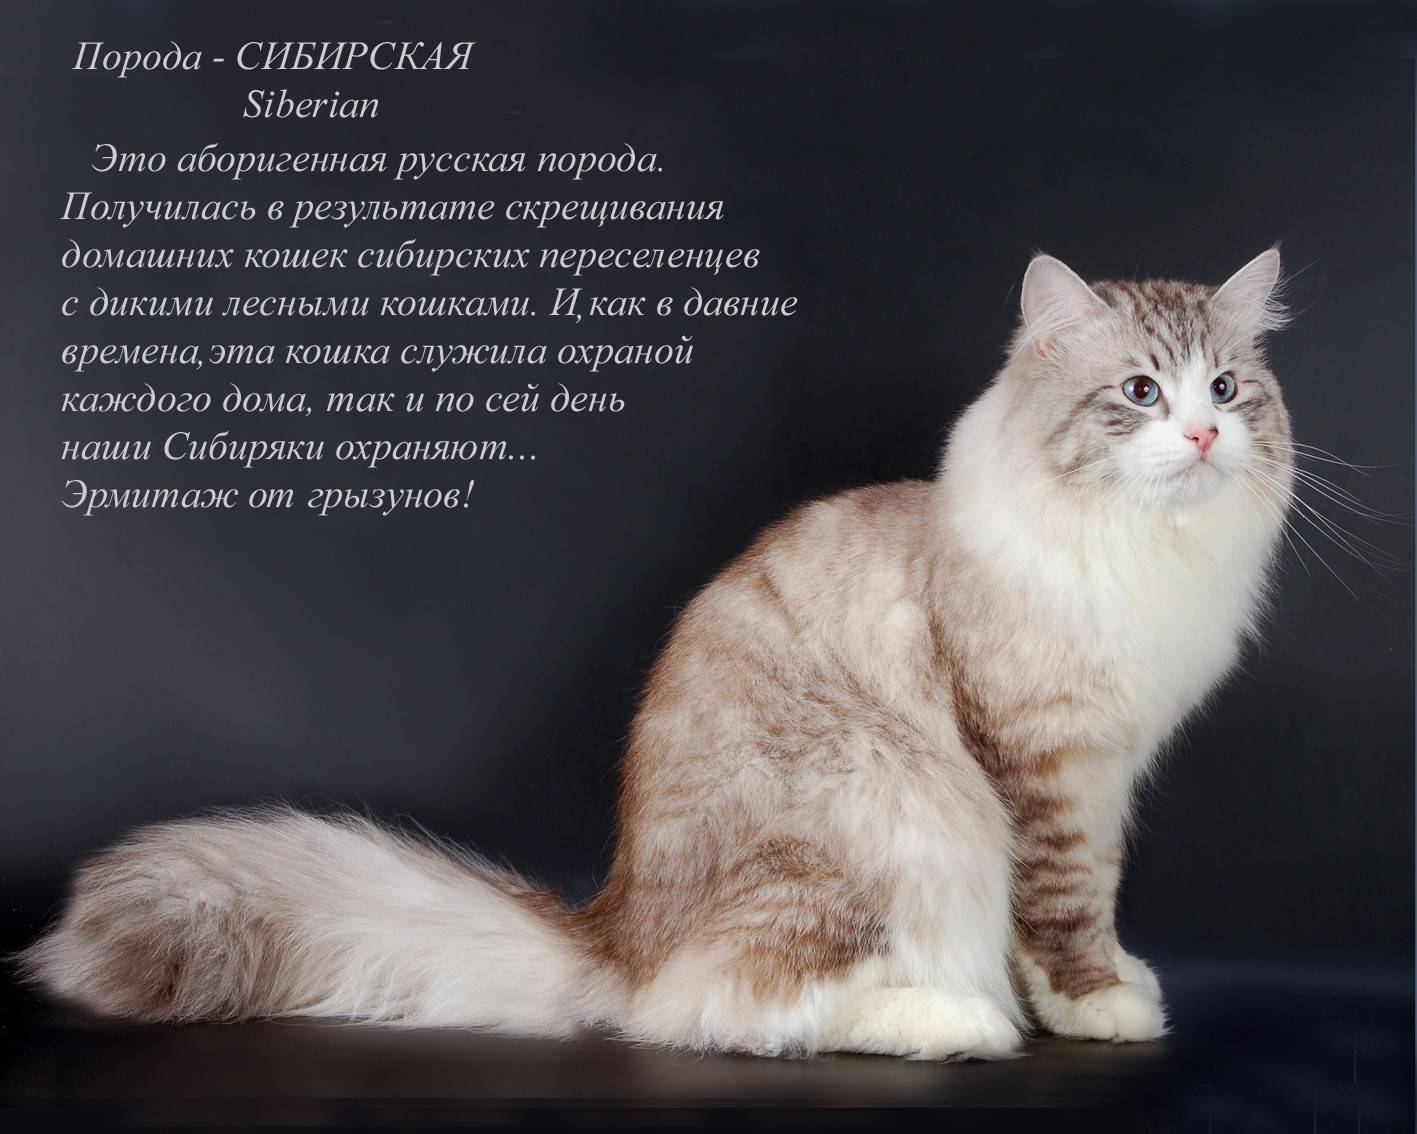 Рагамаффин - описание породы и характер кошки